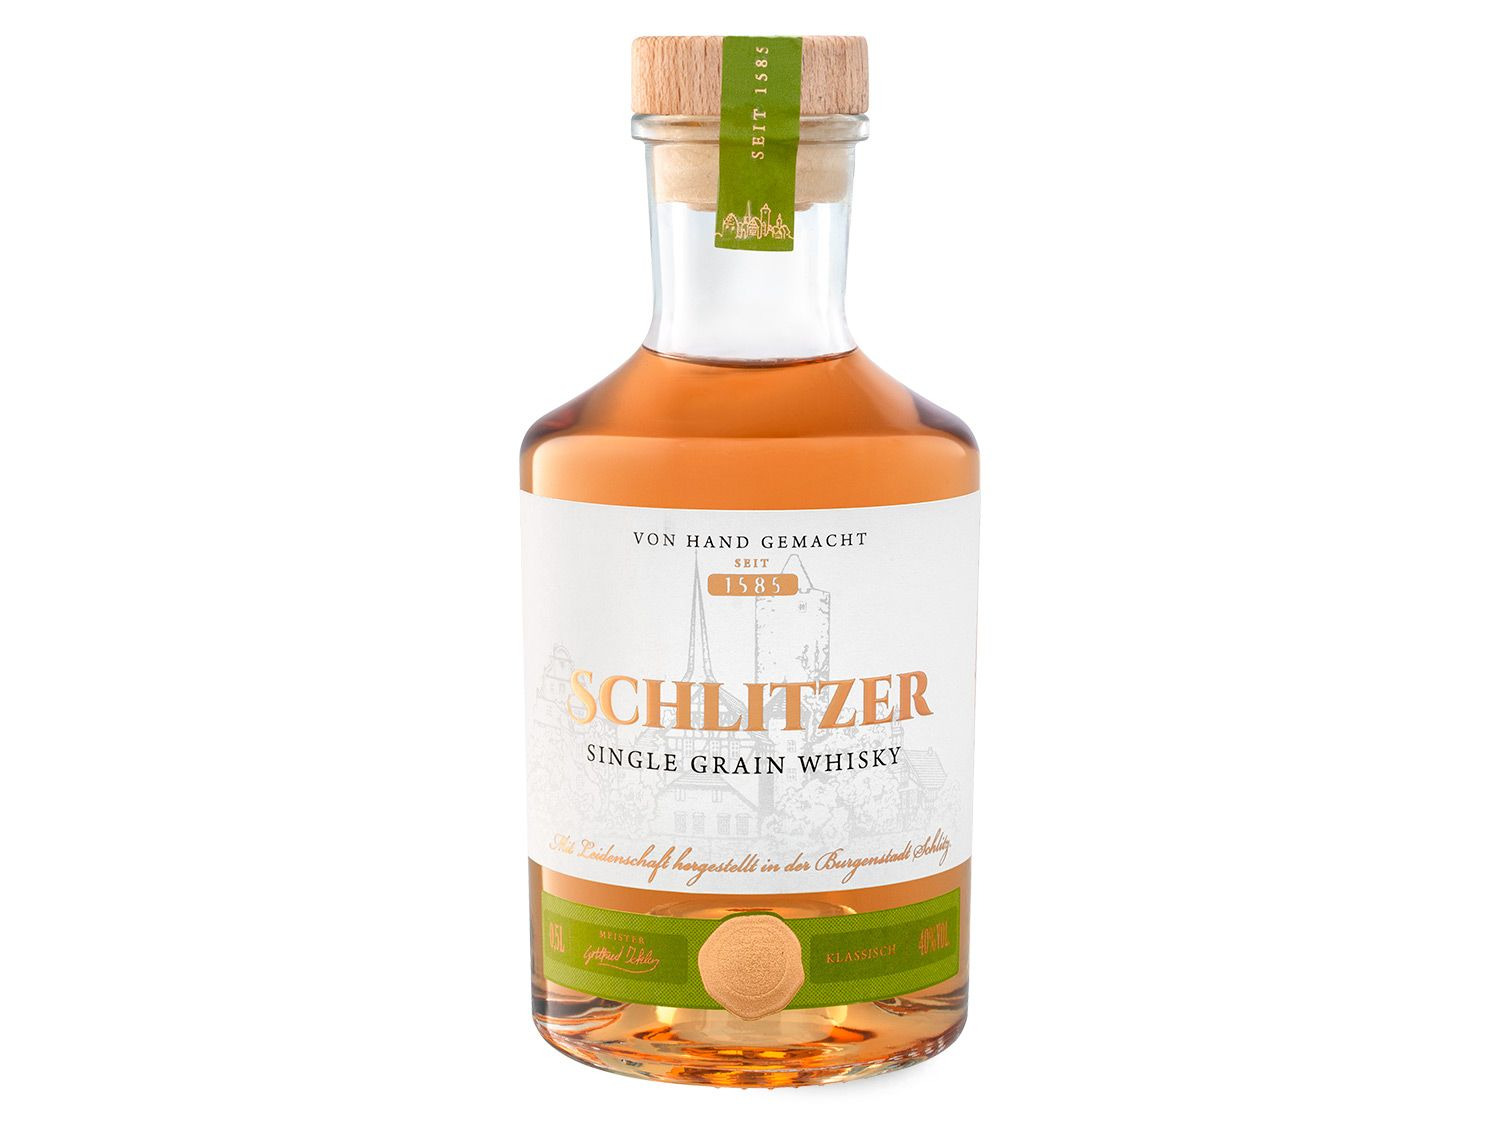 Schlitzer Single Grain Whisky 40% Vol | LIDL